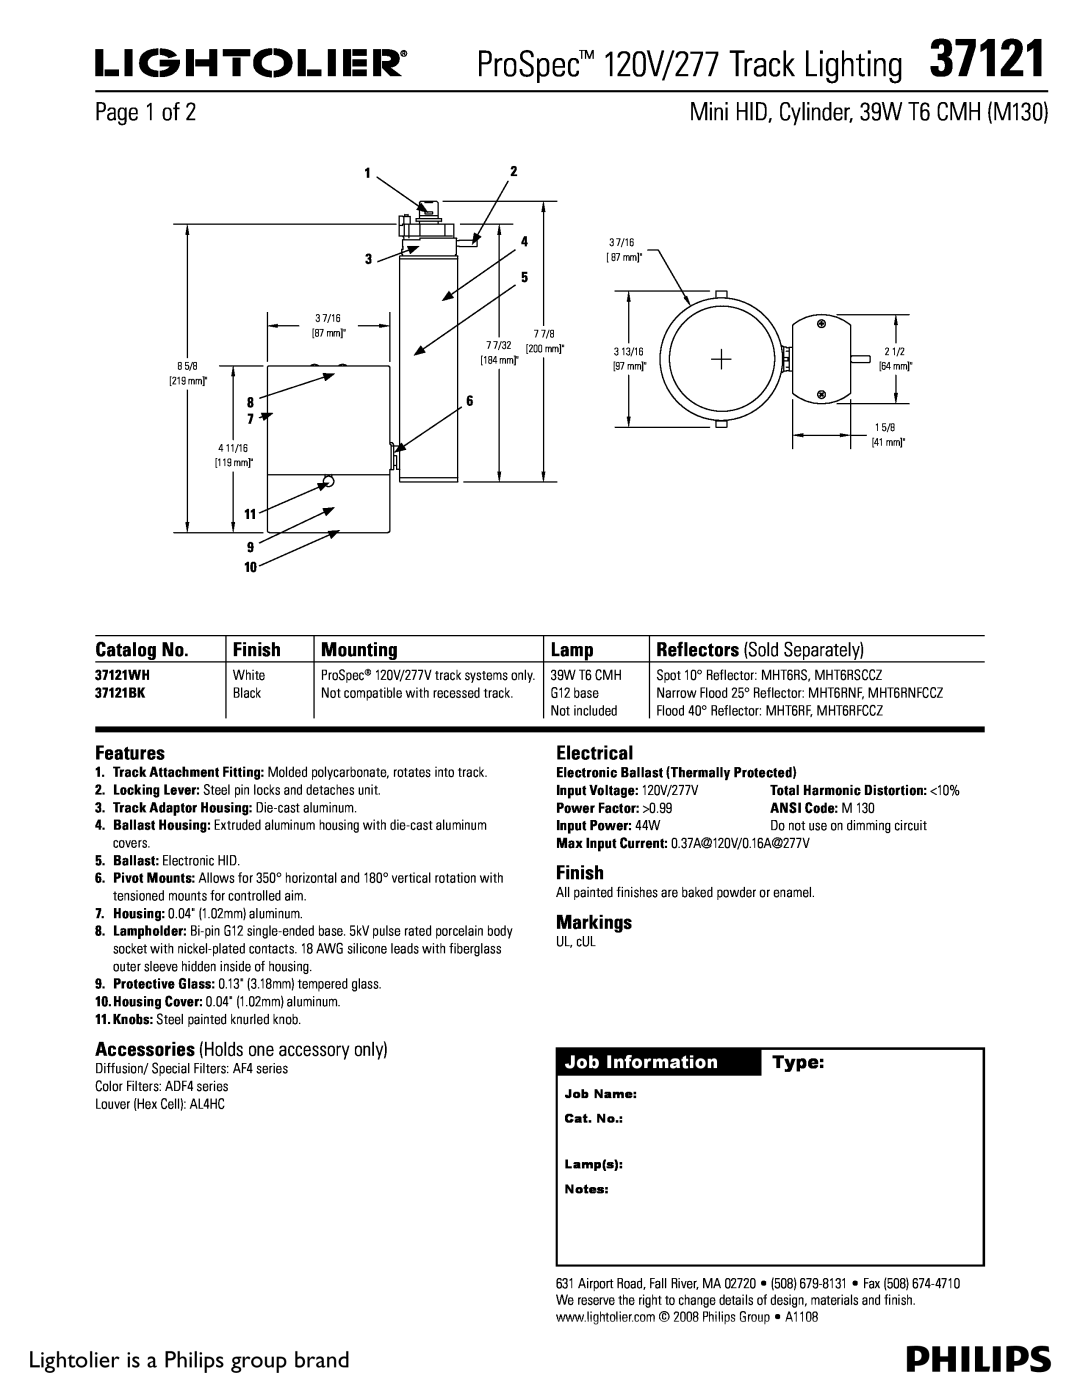 Lightolier manual ProSpec 120V/277 Track Lighting37121, Mini HID, Cylinder, 39W T6 CMH M130, Page 1 of, Job Information 